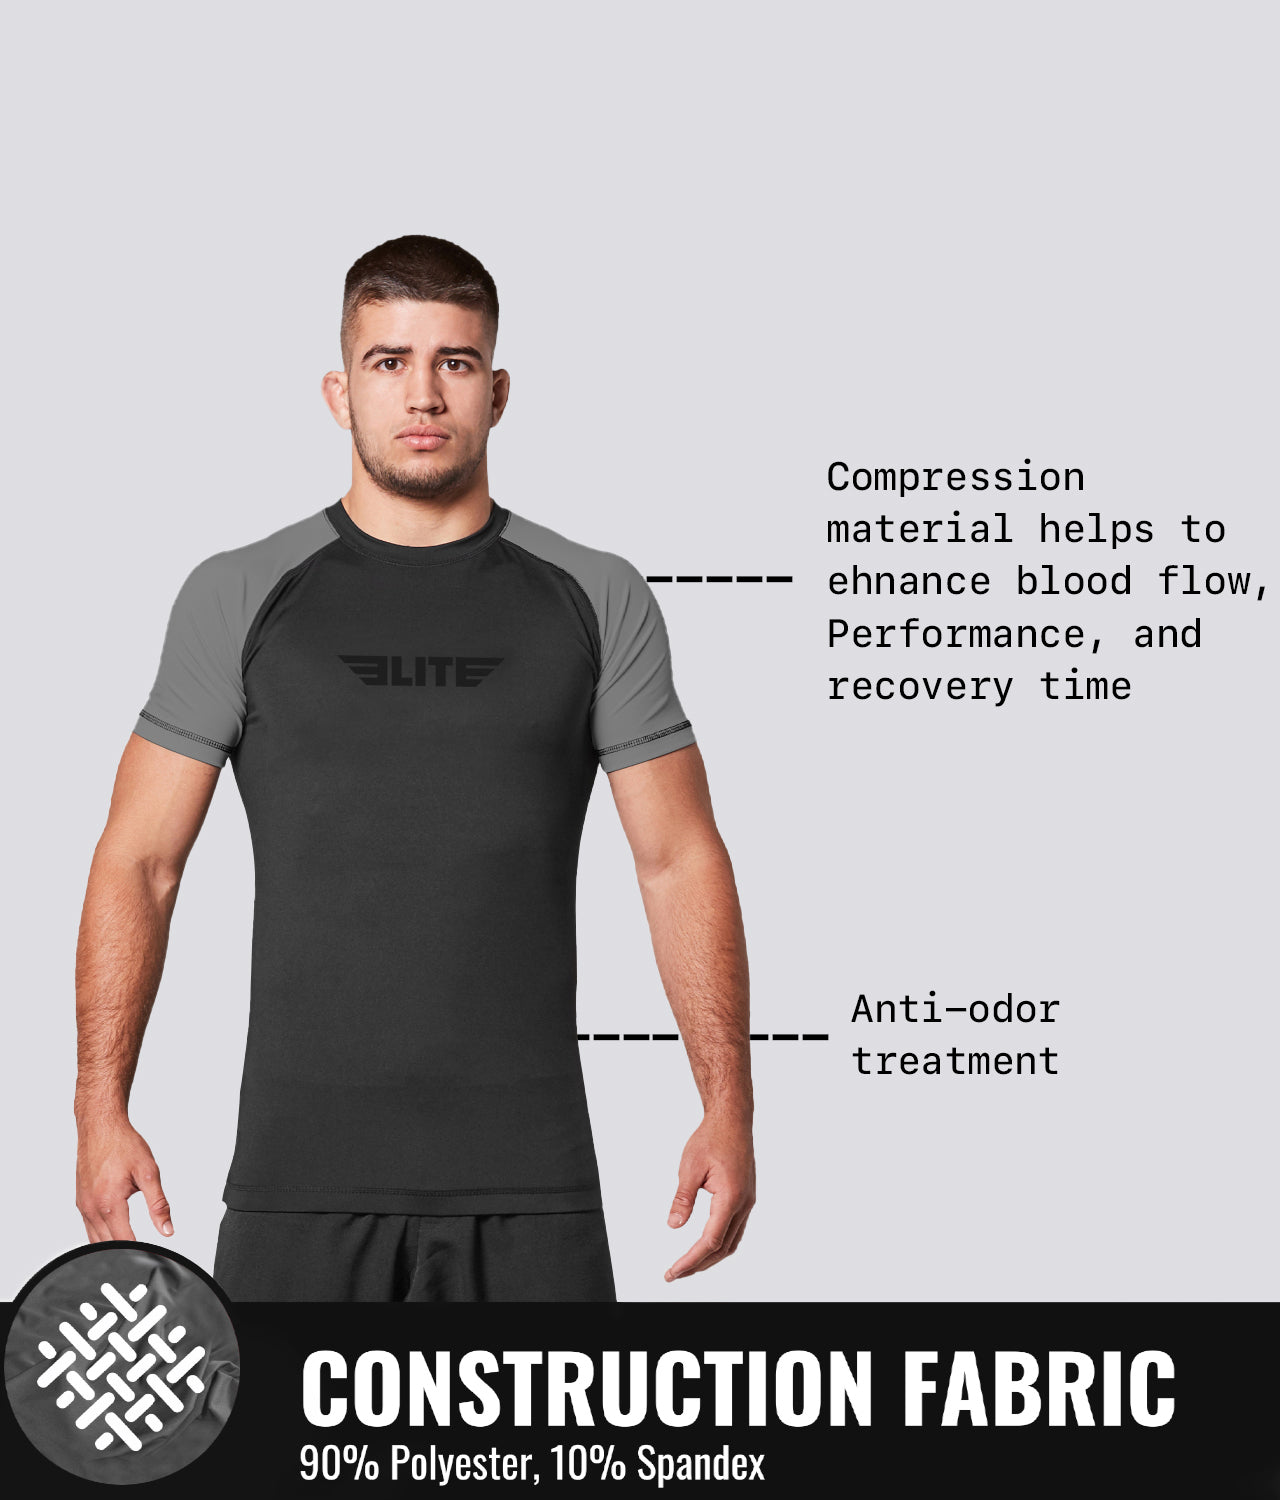 Elite Sports Men's Standard Gray Short Sleeve Training Rash Guard